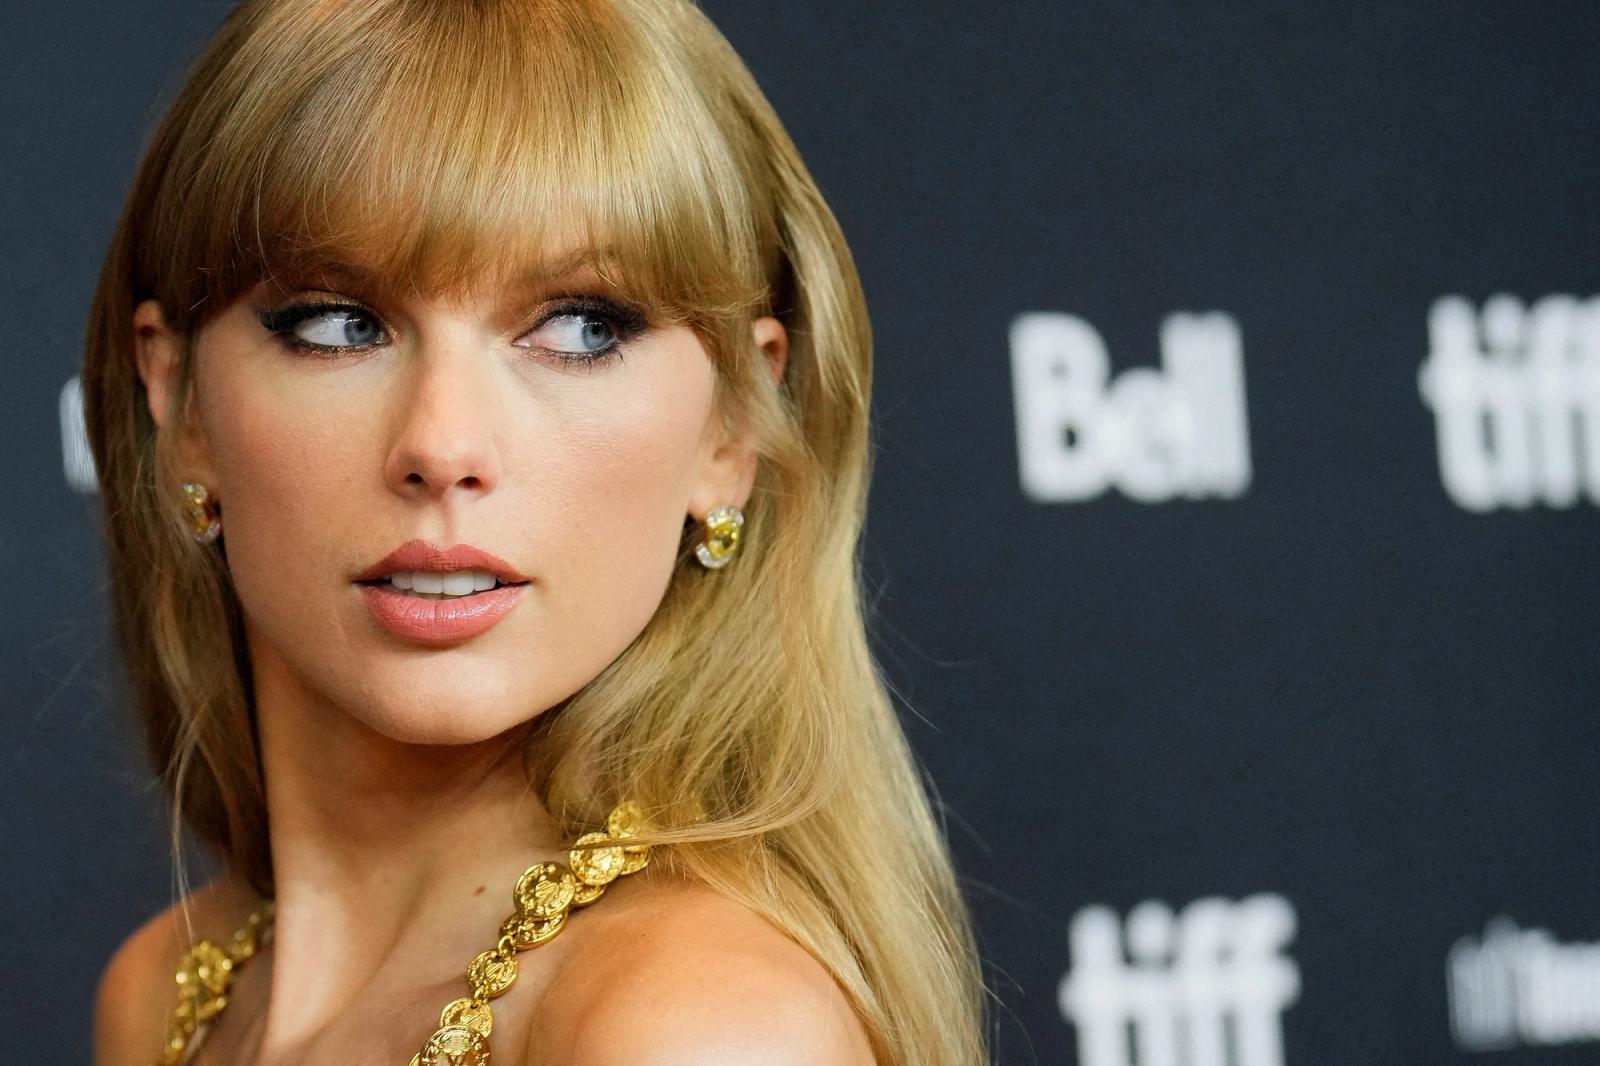 Singer Taylor Swift arrives to speak at the Toronto International Film Festival (TIFF) in Toronto, Ontario, Canada September 9, 2022. 